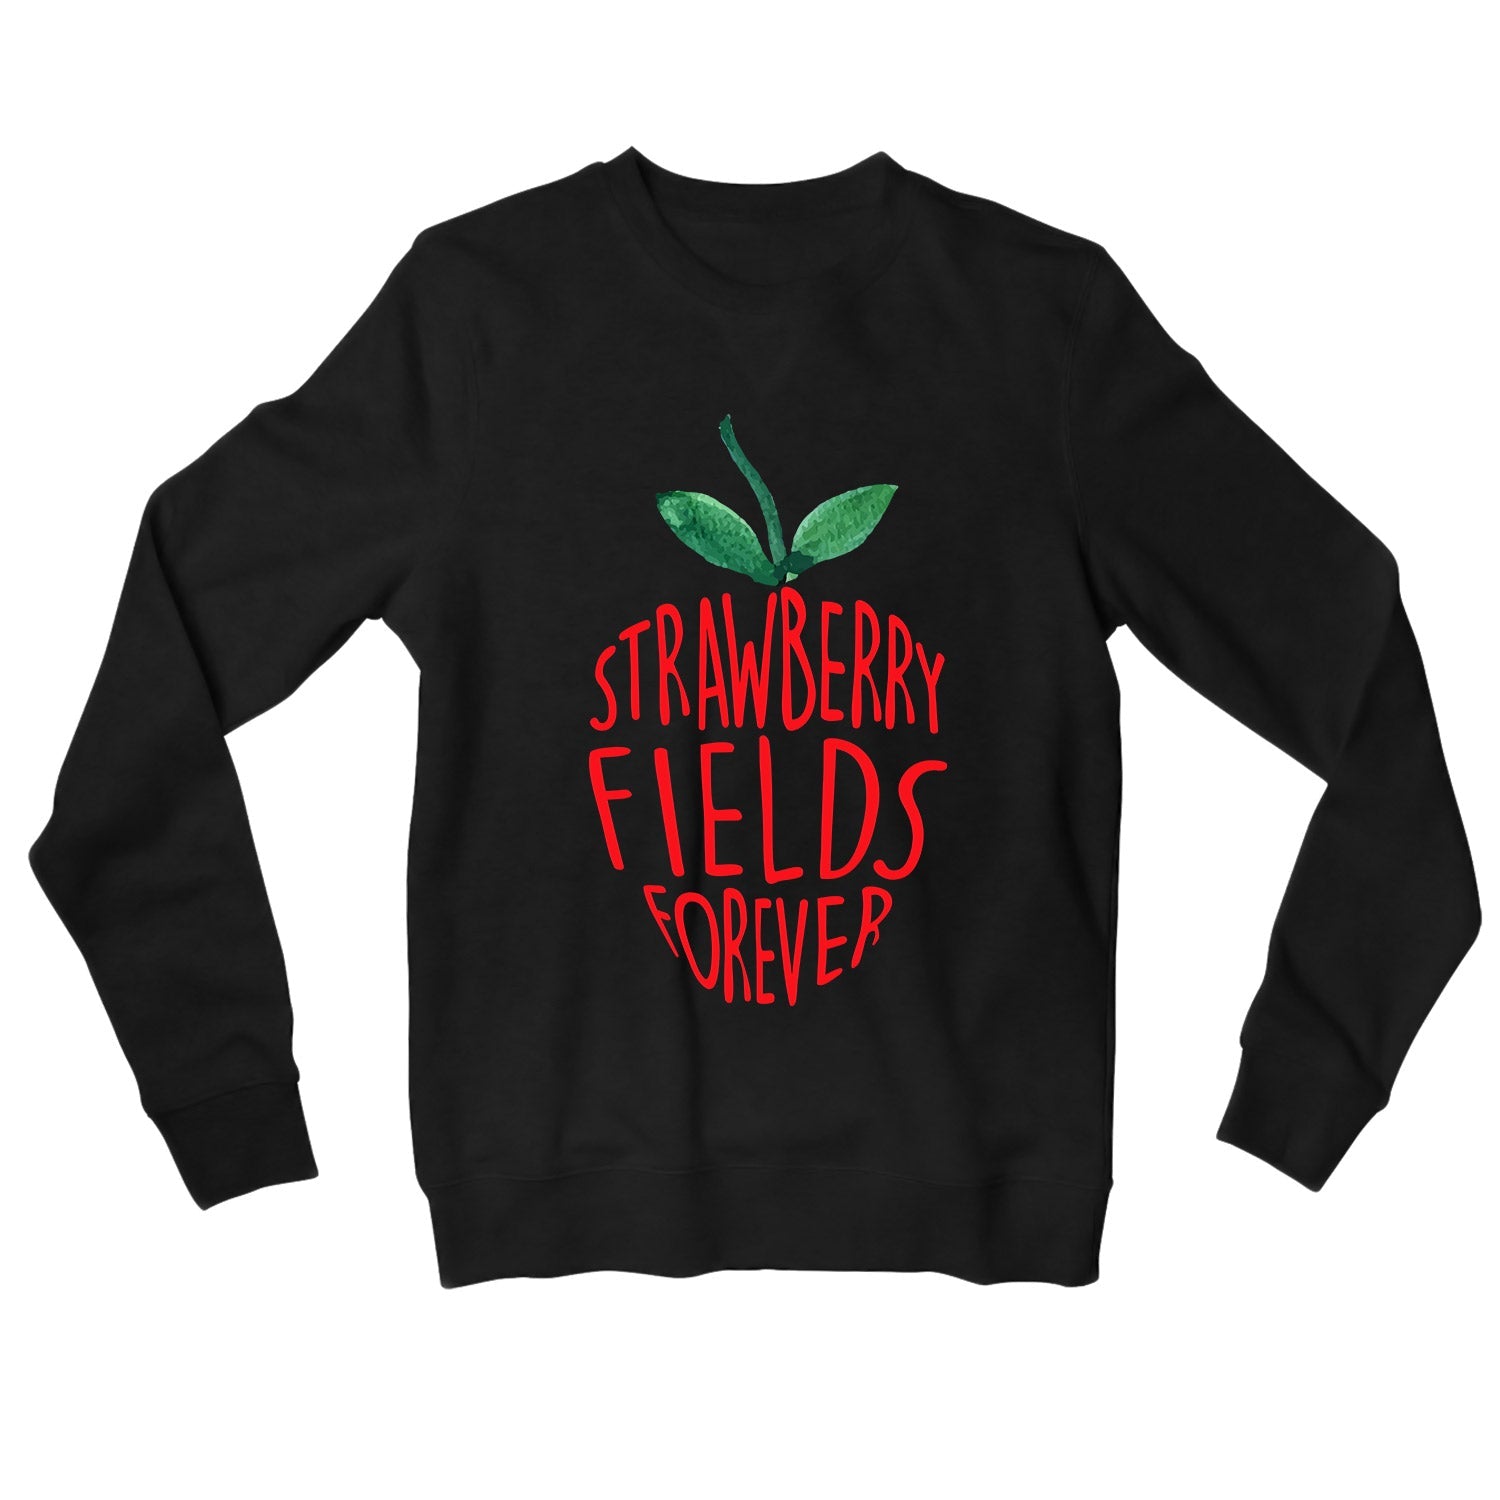 The Beatles Sweatshirt - Strawberry Fields Forever Sweatshirt The Banyan Tee TBT